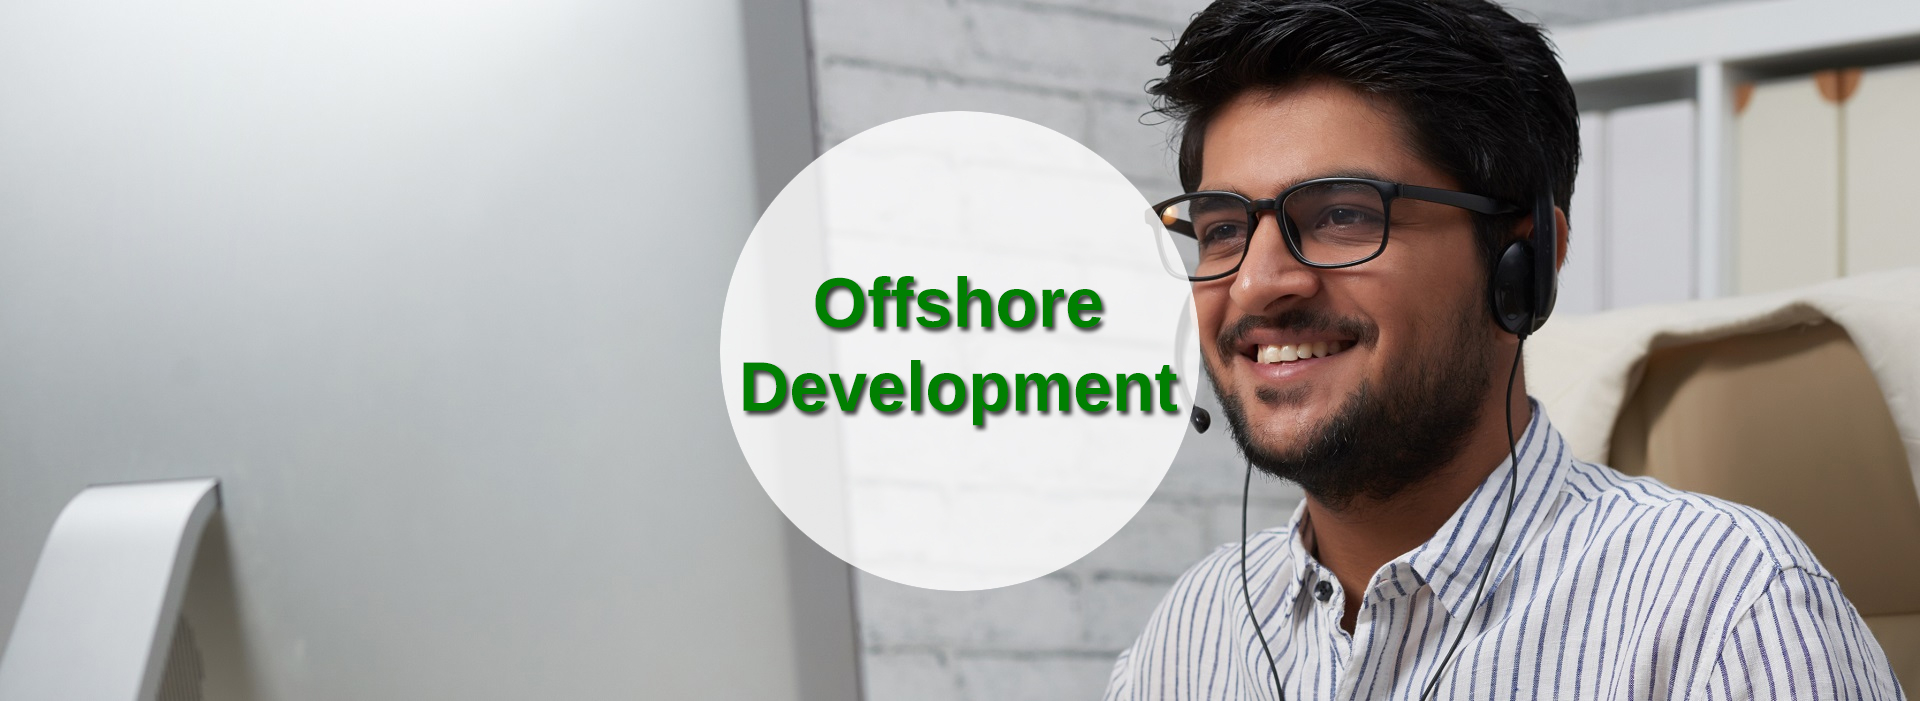 Offshore Development 